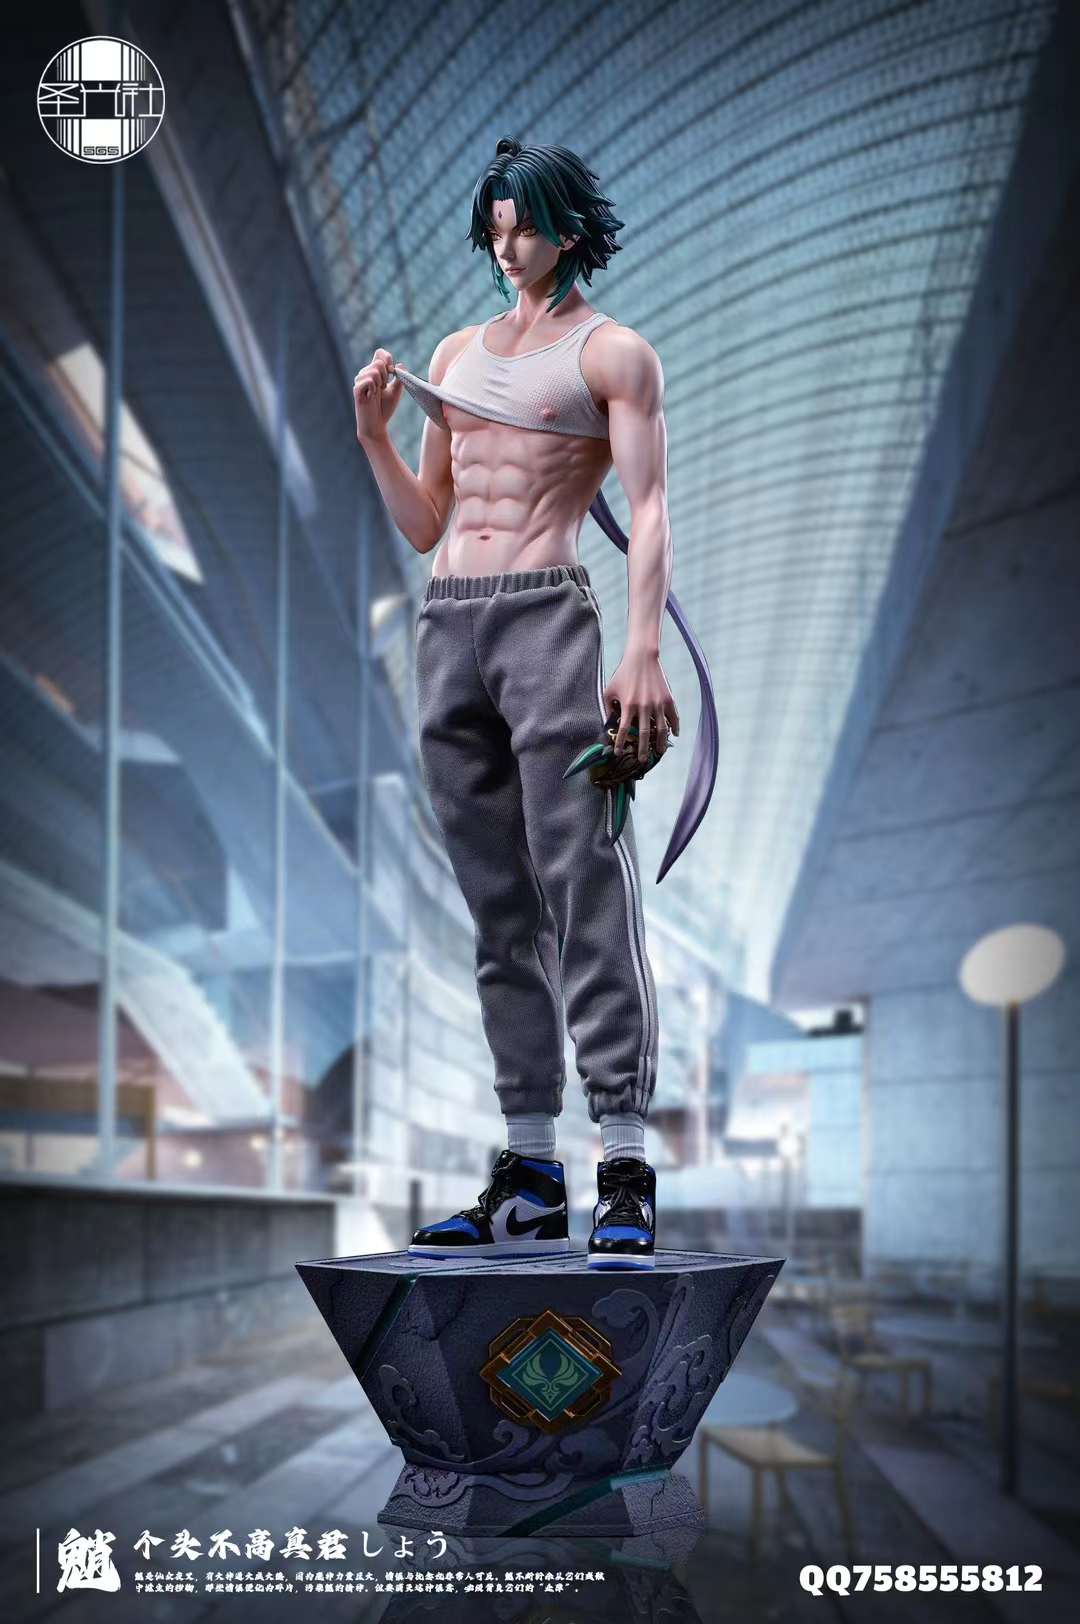 Original Character Figma Action Figure Male Blazer Body (Ryo) 14 cm